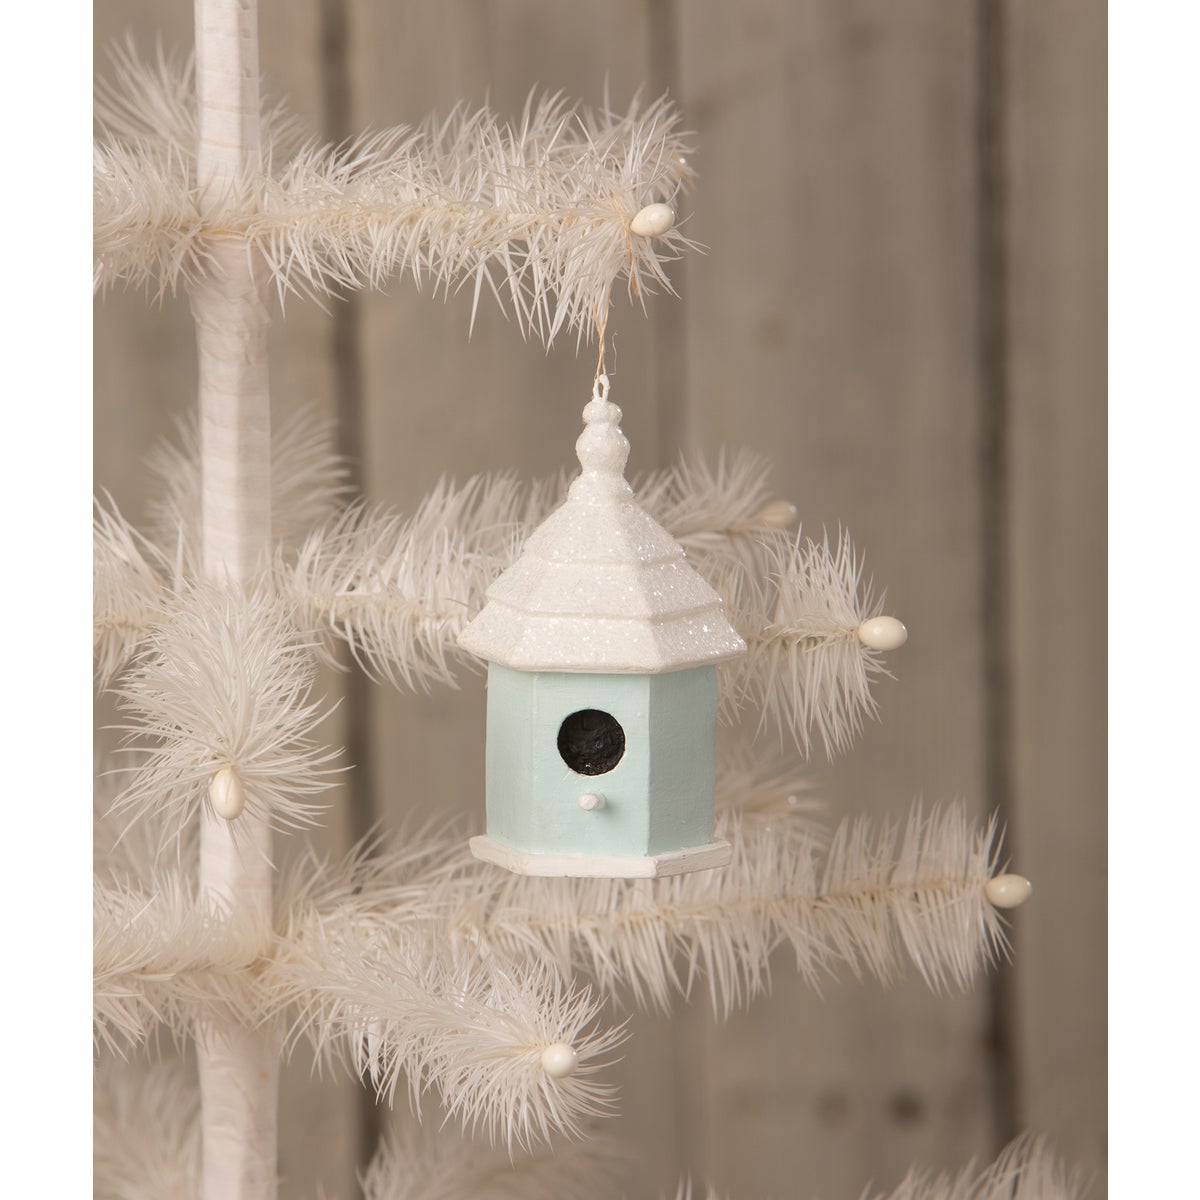 Blue Birdhouse Ornament